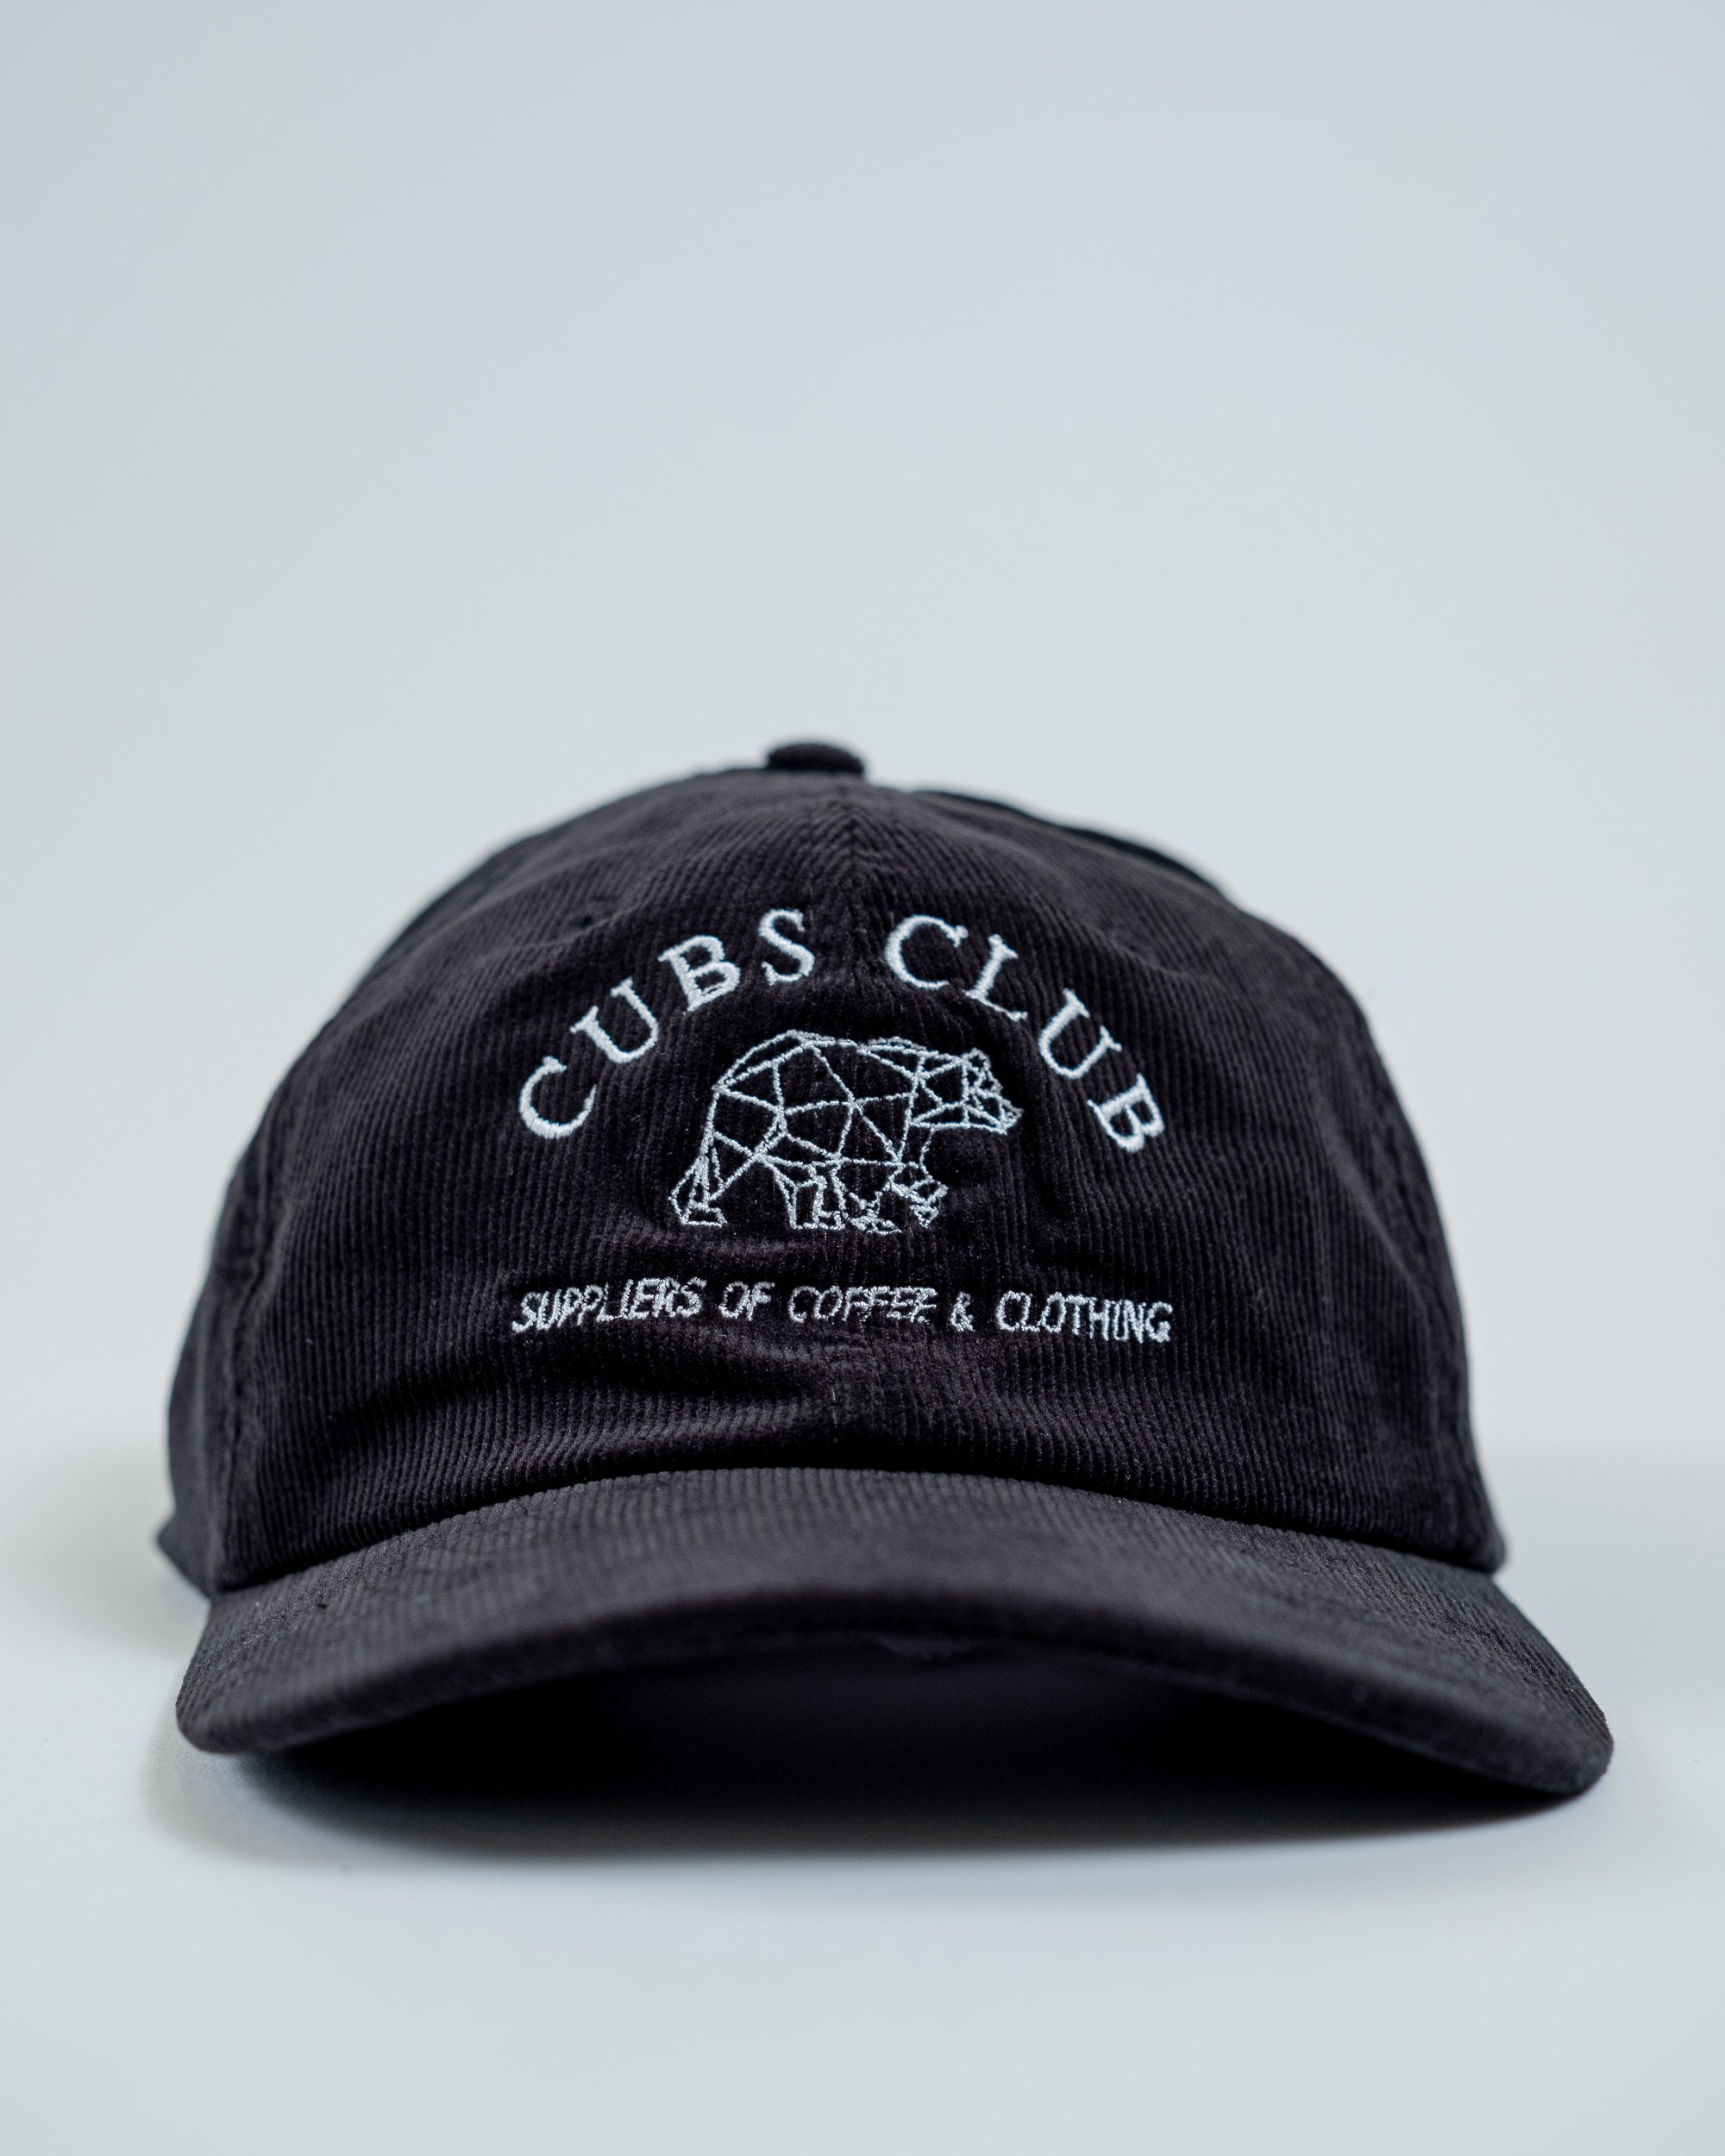 Cubs Club Cord Cap in Black 